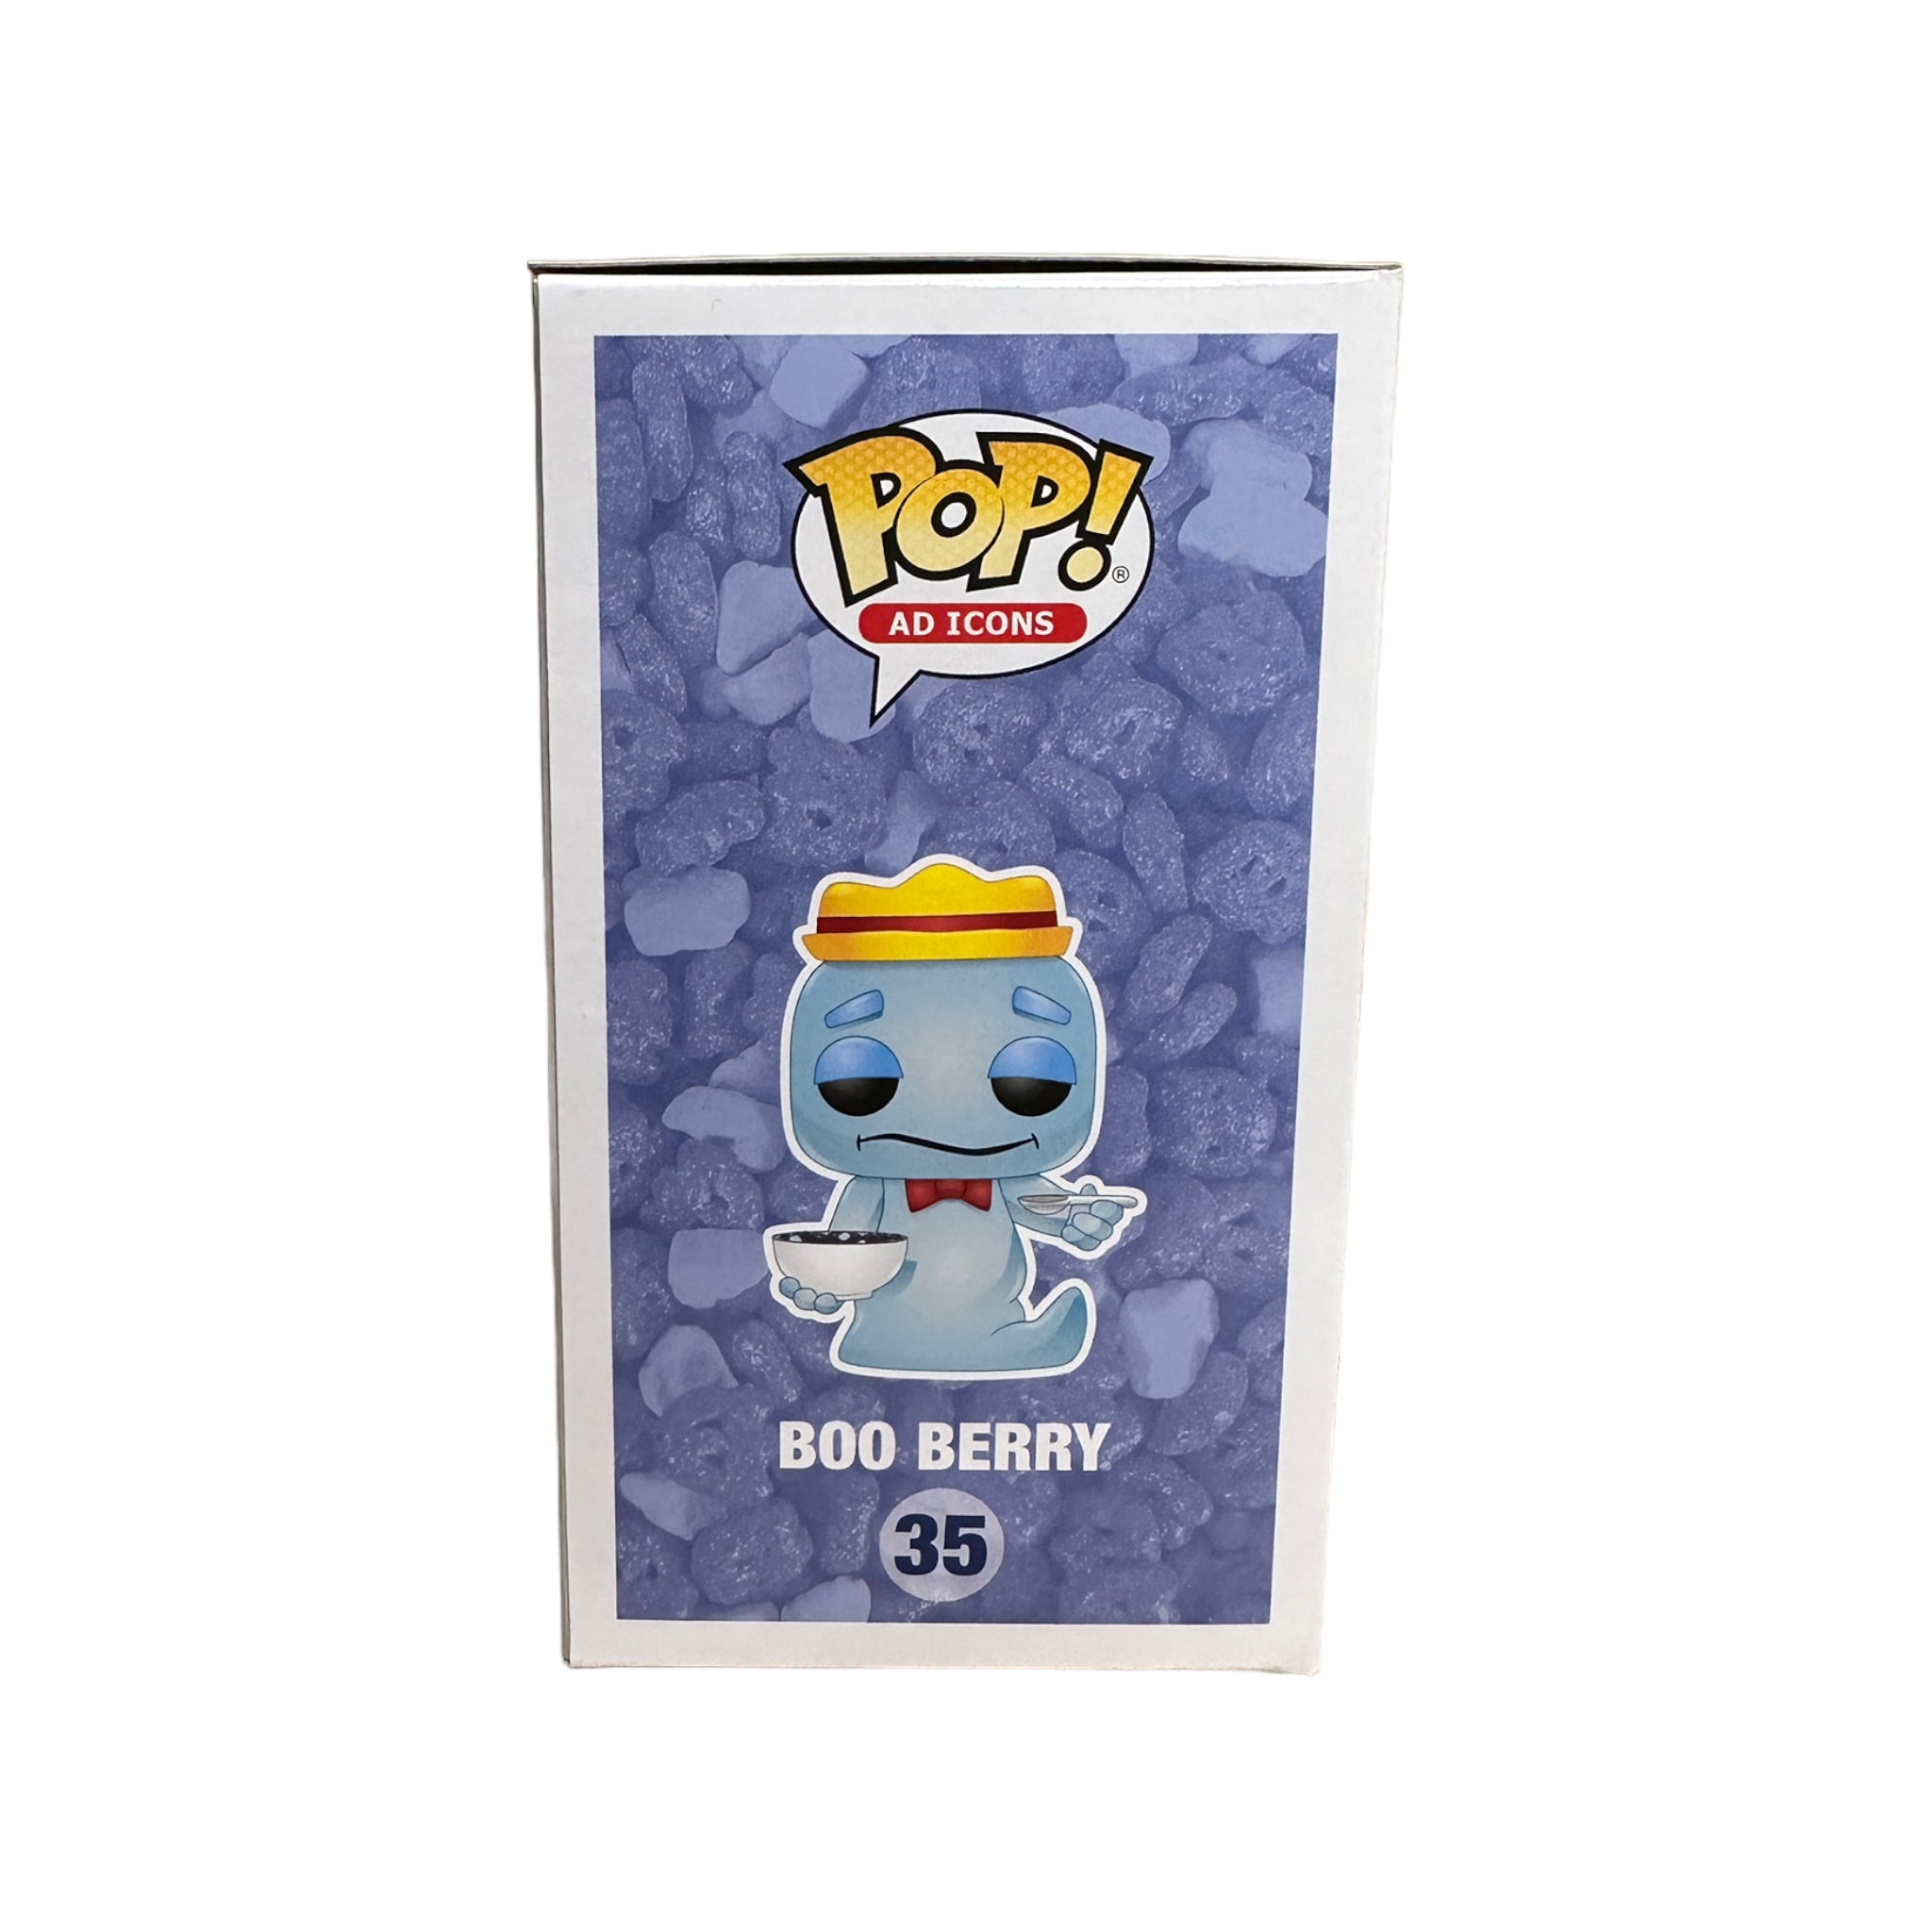 Boo Berry #35 (w/ Cereal) Funko Pop! - Ad Icons - Funko Shop Exclusive - Condition 8/10